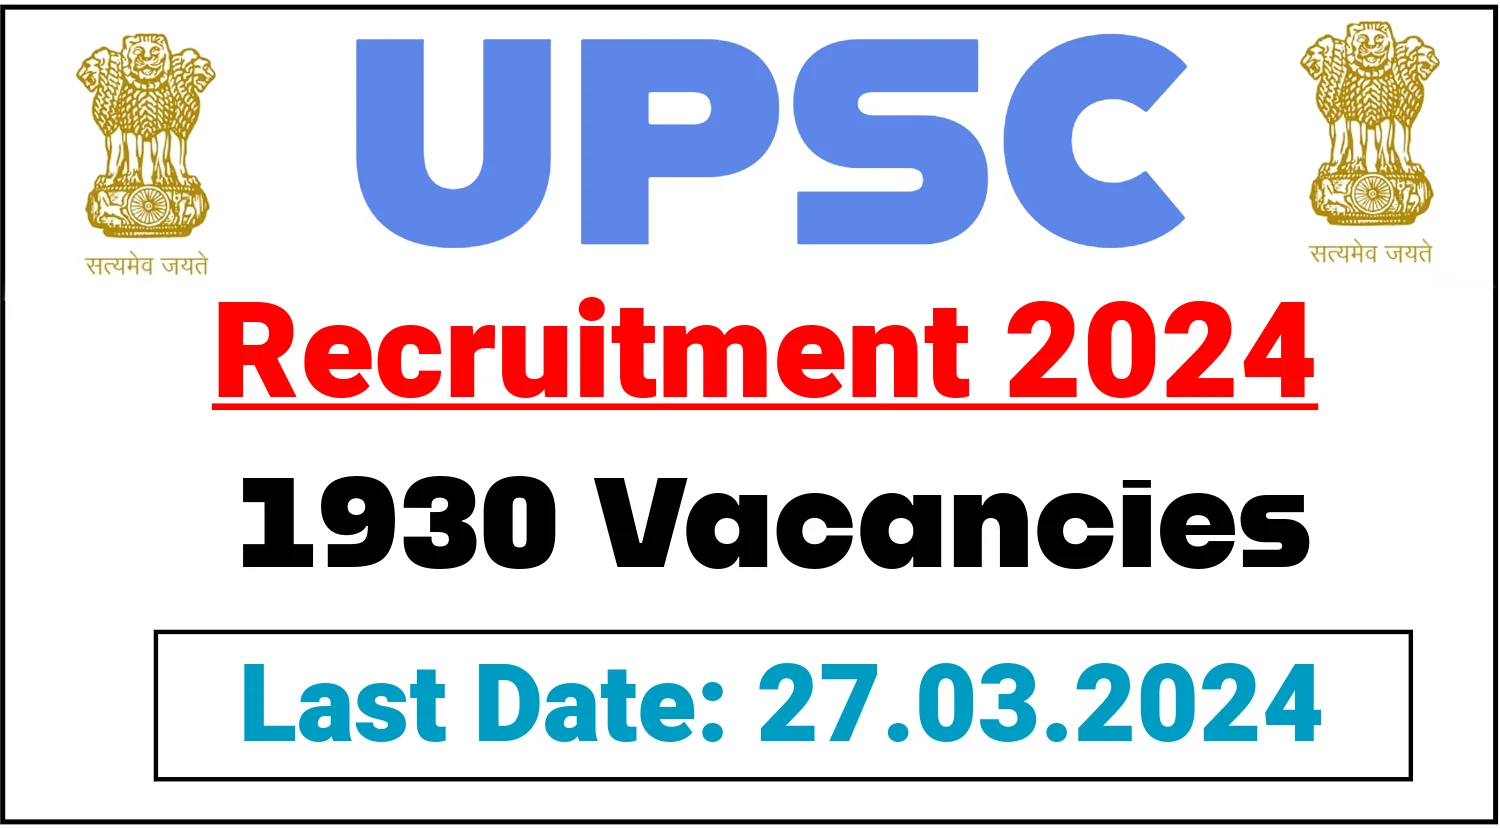 UPSC ESIC Nursing Officer Recruitment 2024 for 1930 Vacancies